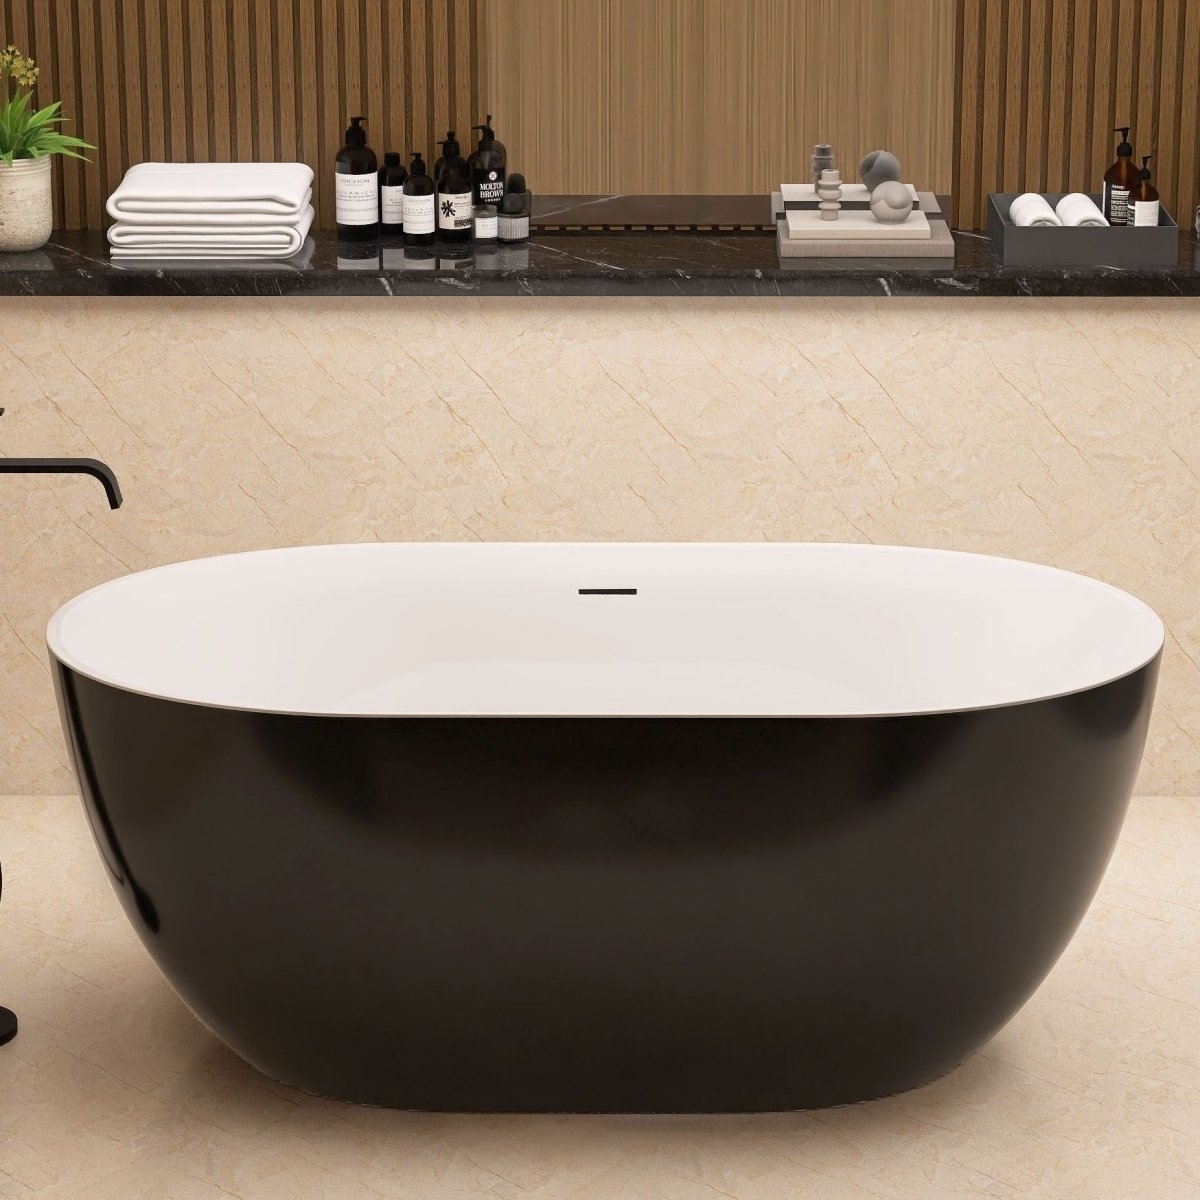 ExBrite 59 Acrylic Bathtub Free Standing Tub Oval Shape Soaking Tub Adjustable Freestanding Chrome Pop-up Drain Anti-clogging Black